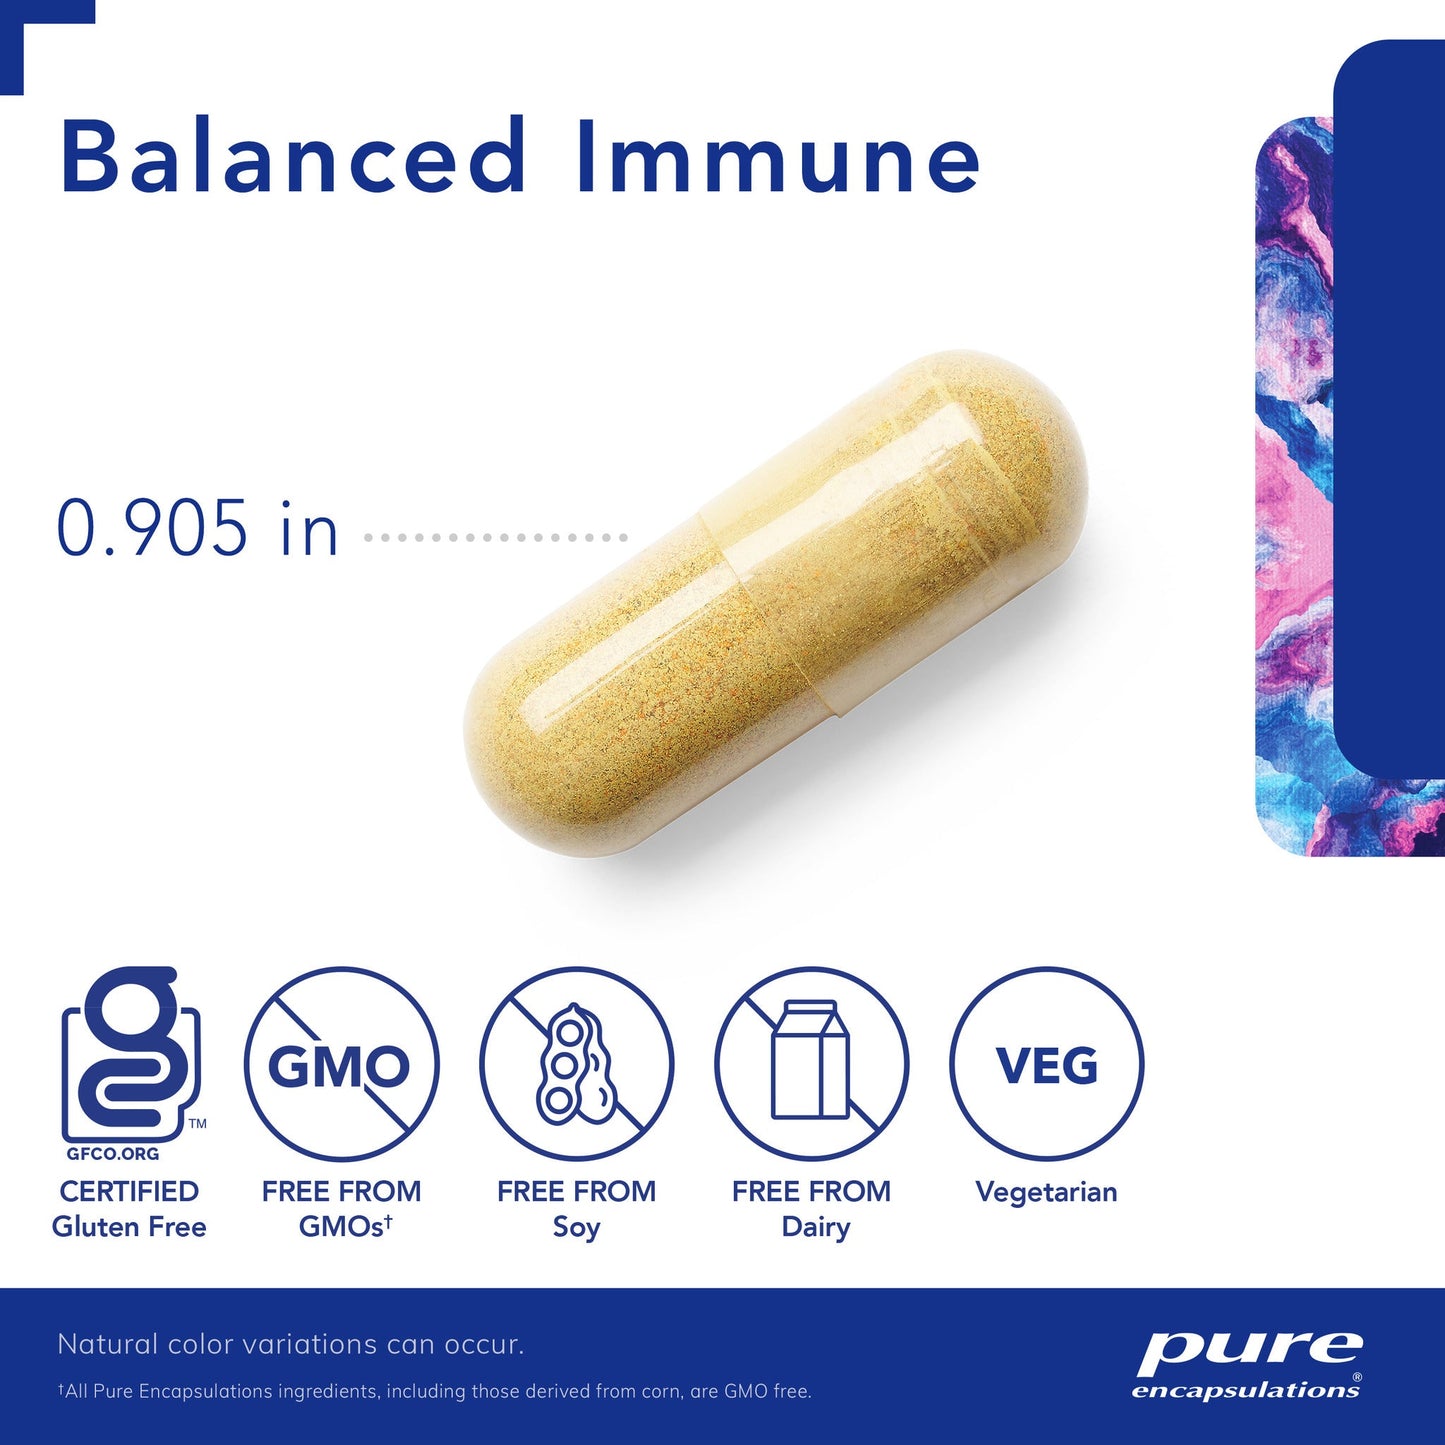 Balanced Immune